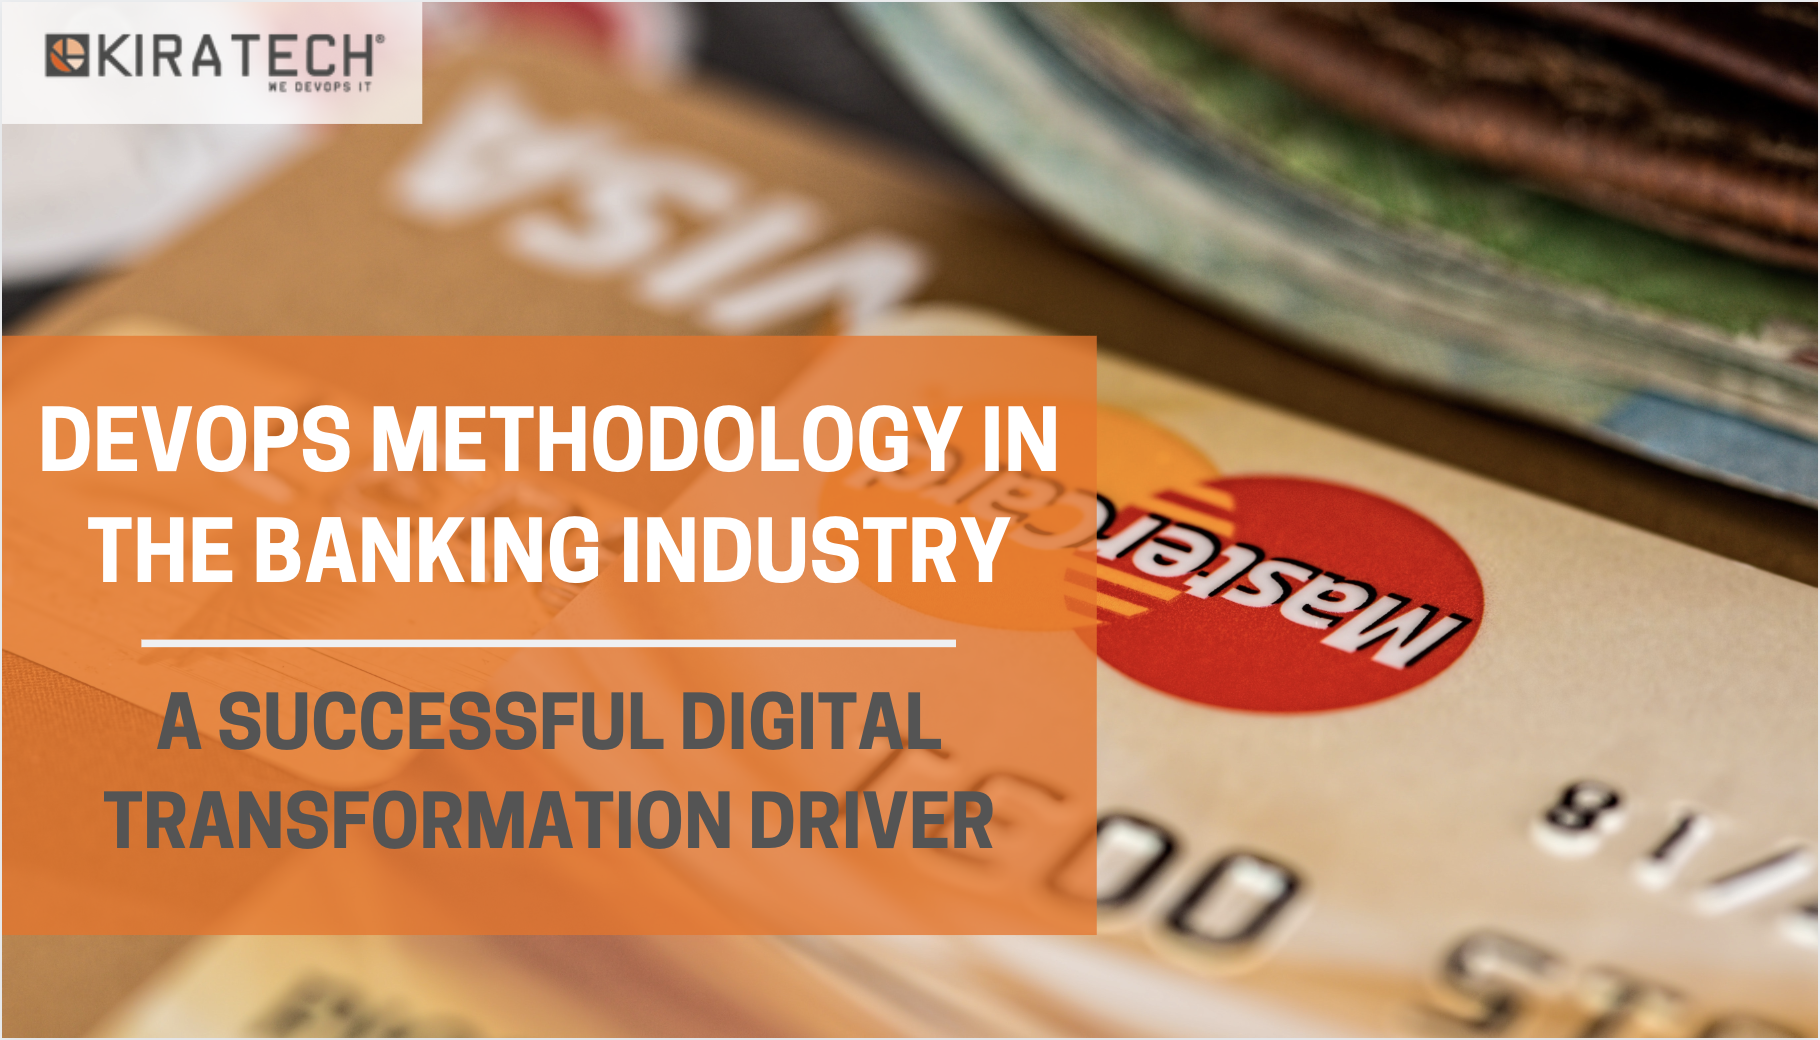 Kiratech_DevOps_methodology_banking_industry_blog_EN